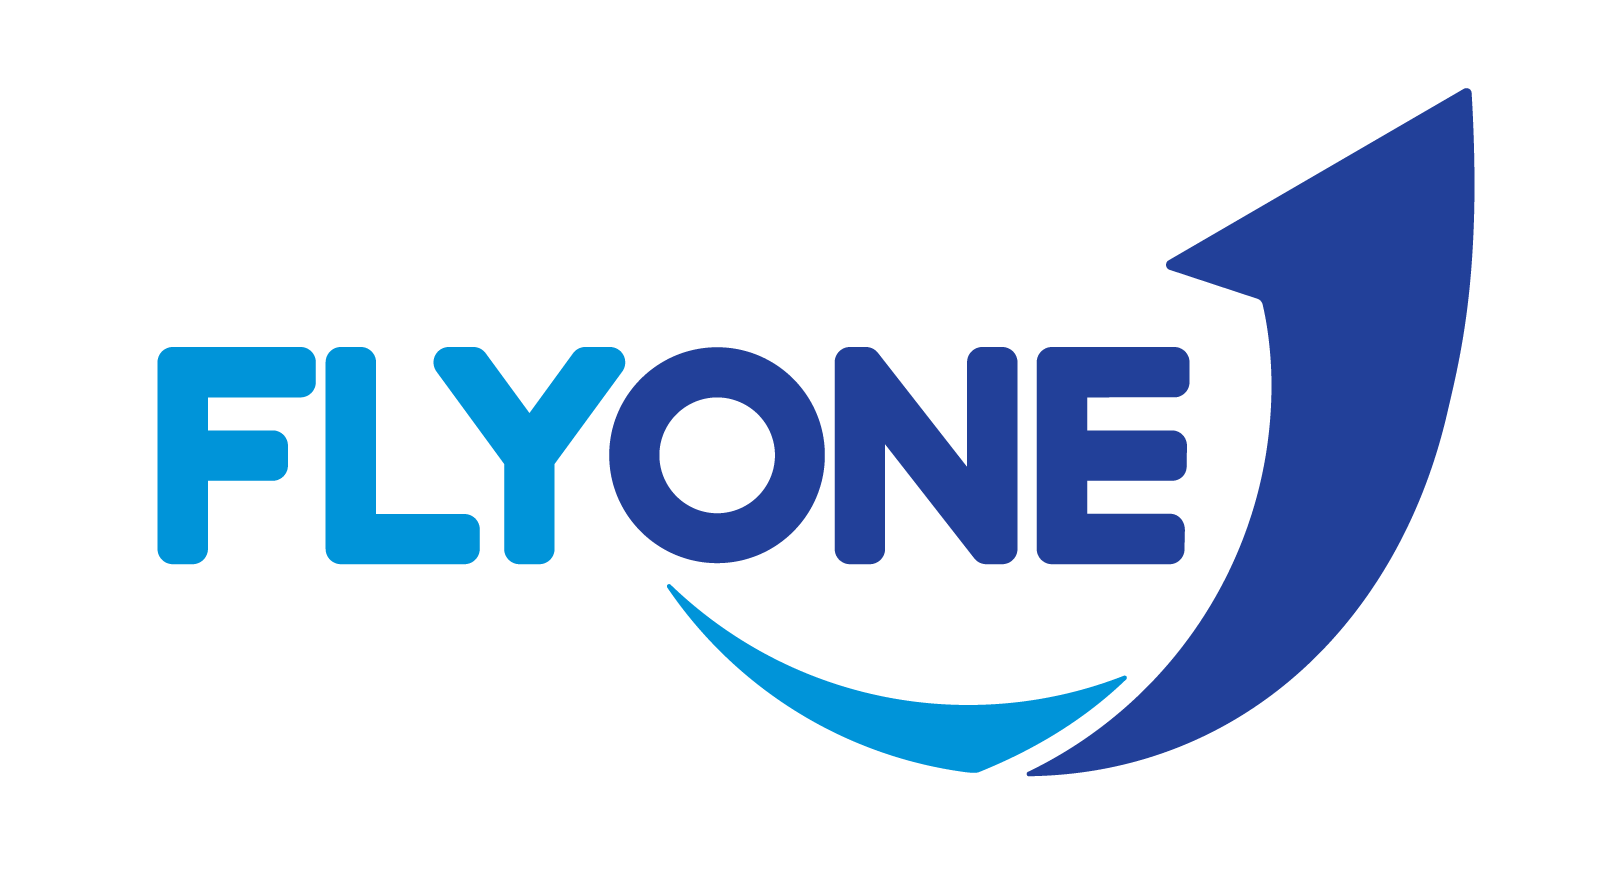 flyone-logo-1.1.png